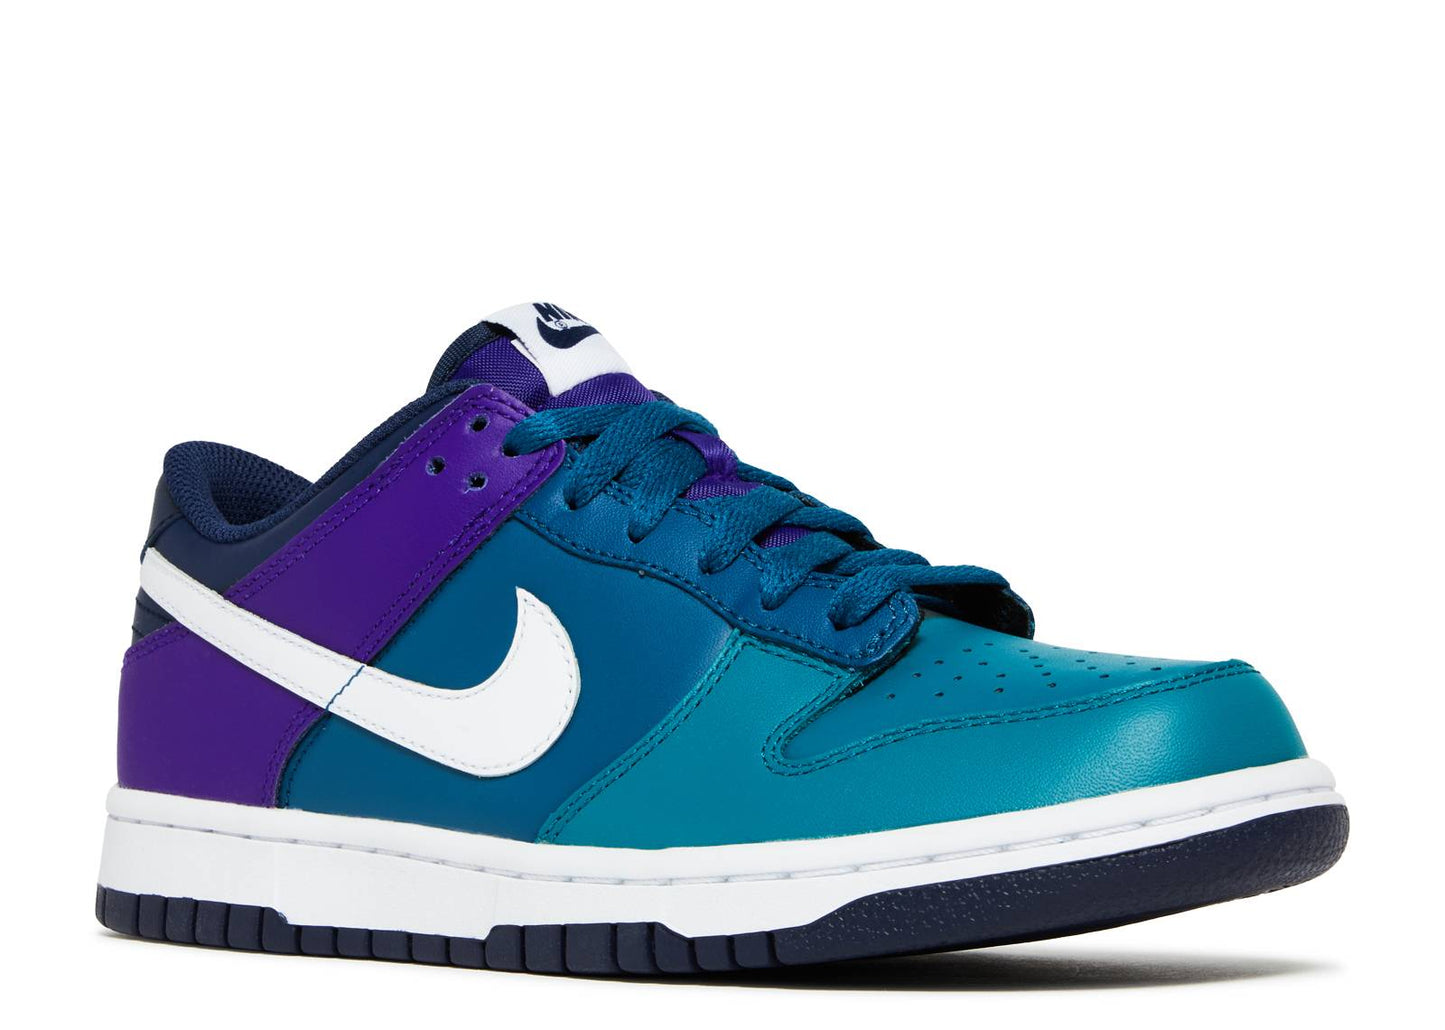 Nike Dunk Low GS "Teal/Purple"